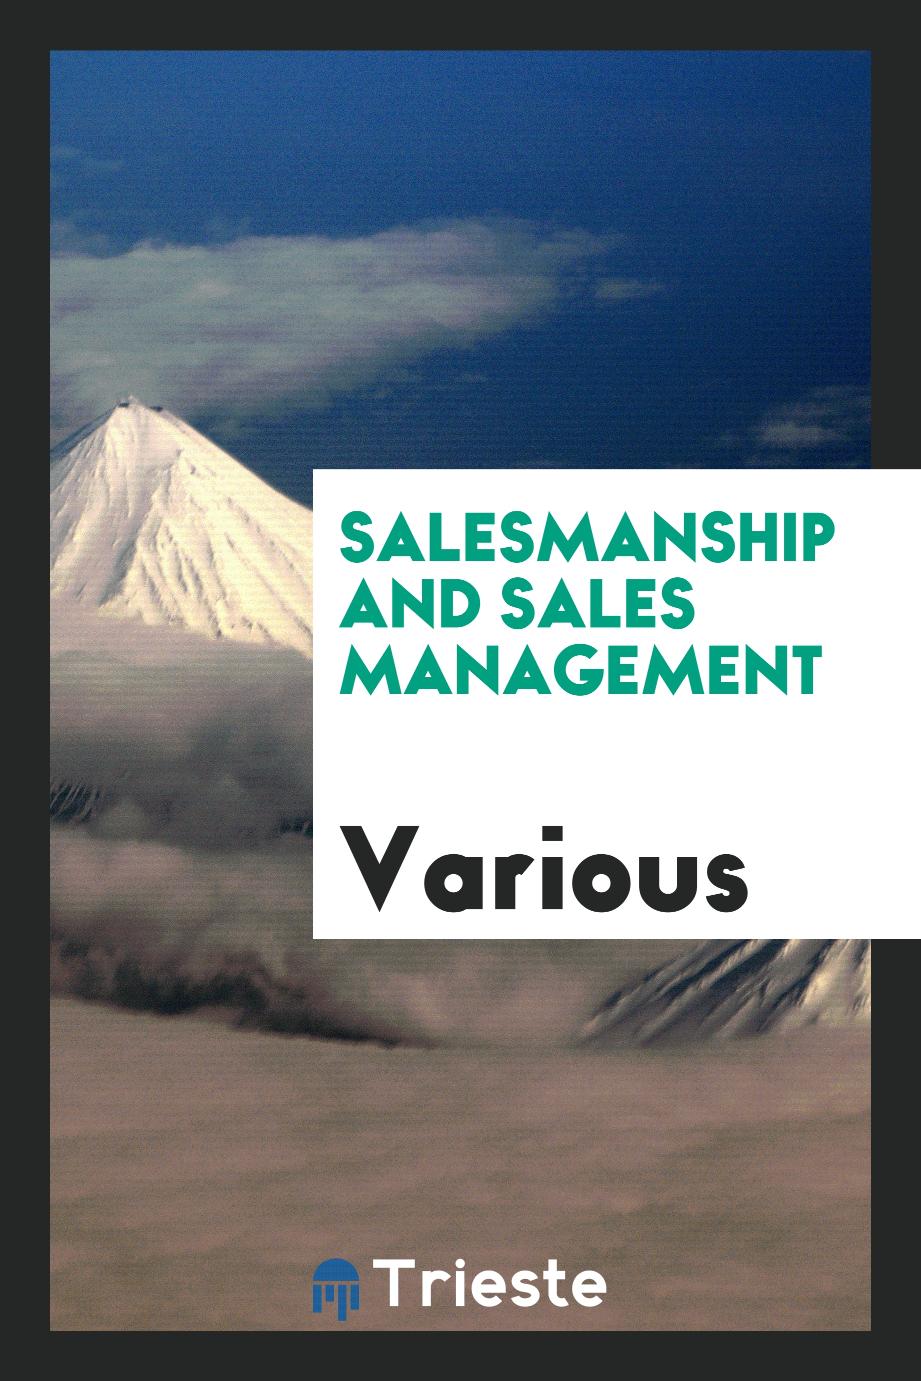 Salesmanship and sales management